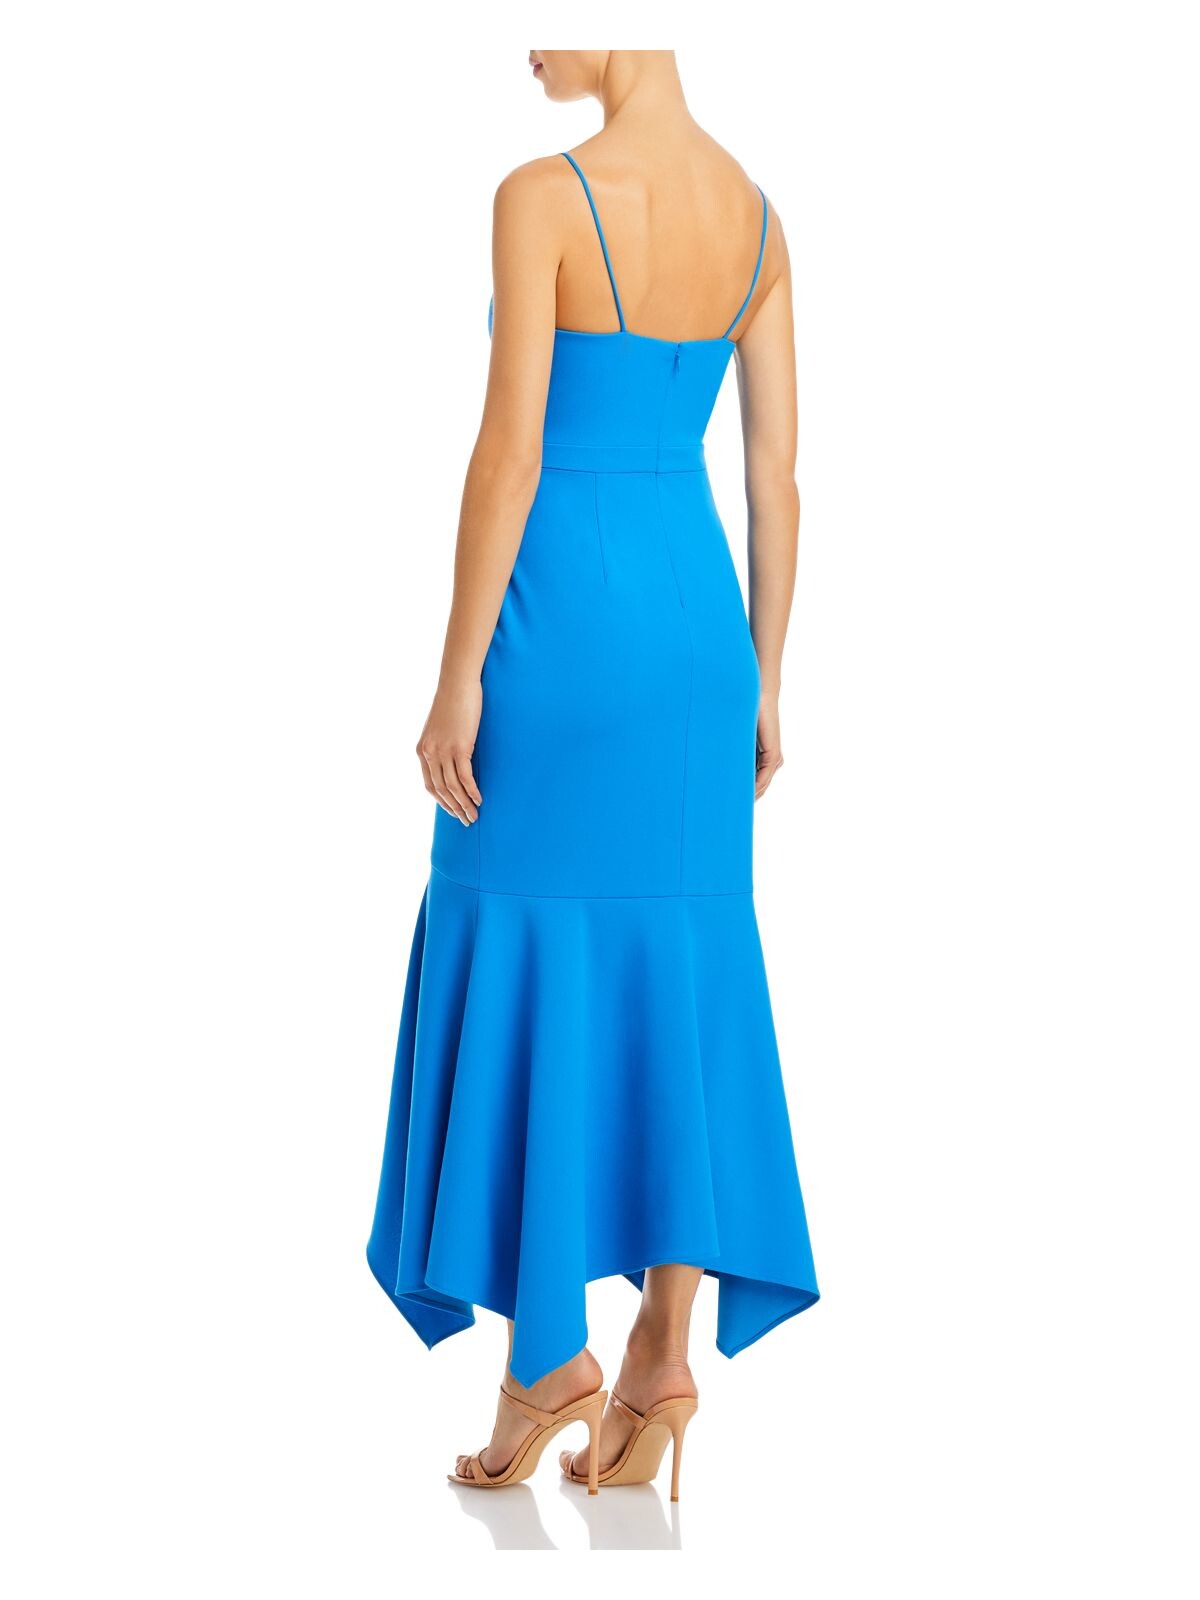 AQUA FORMAL Womens Blue Zippered Adjustable Lined Spaghetti Strap V Neck Full-Length Cocktail Mermaid Dress 8